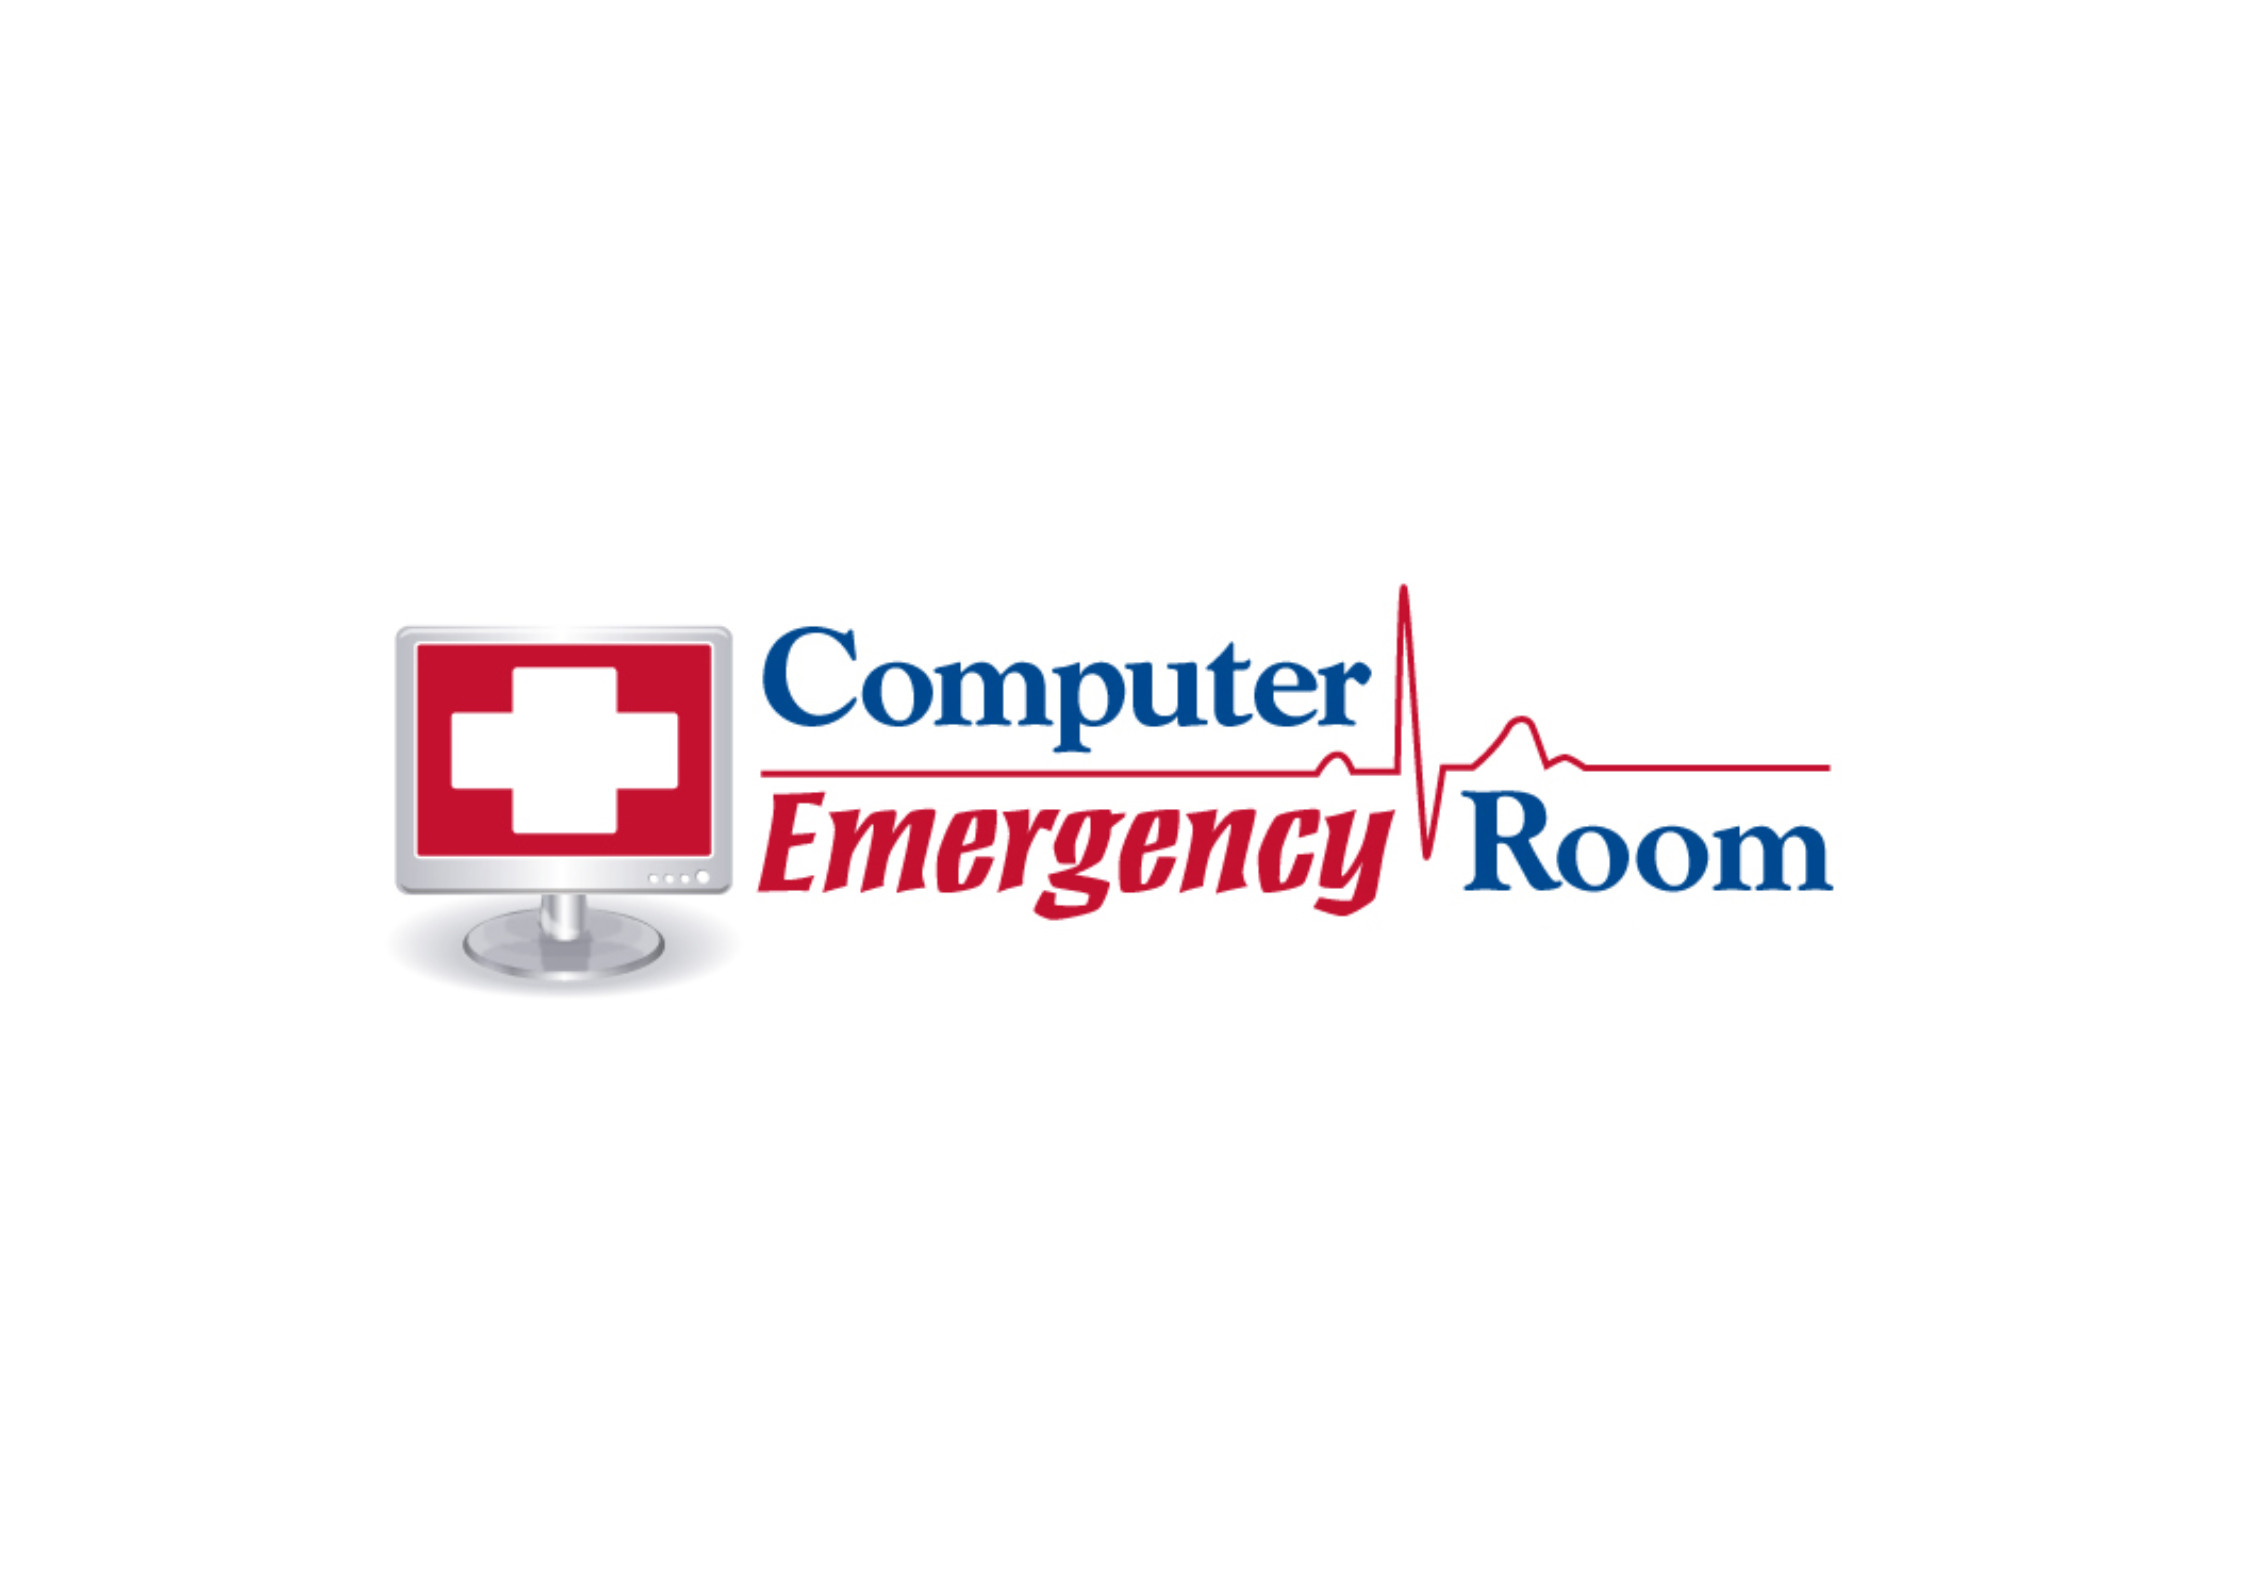 Computer Emergency Room